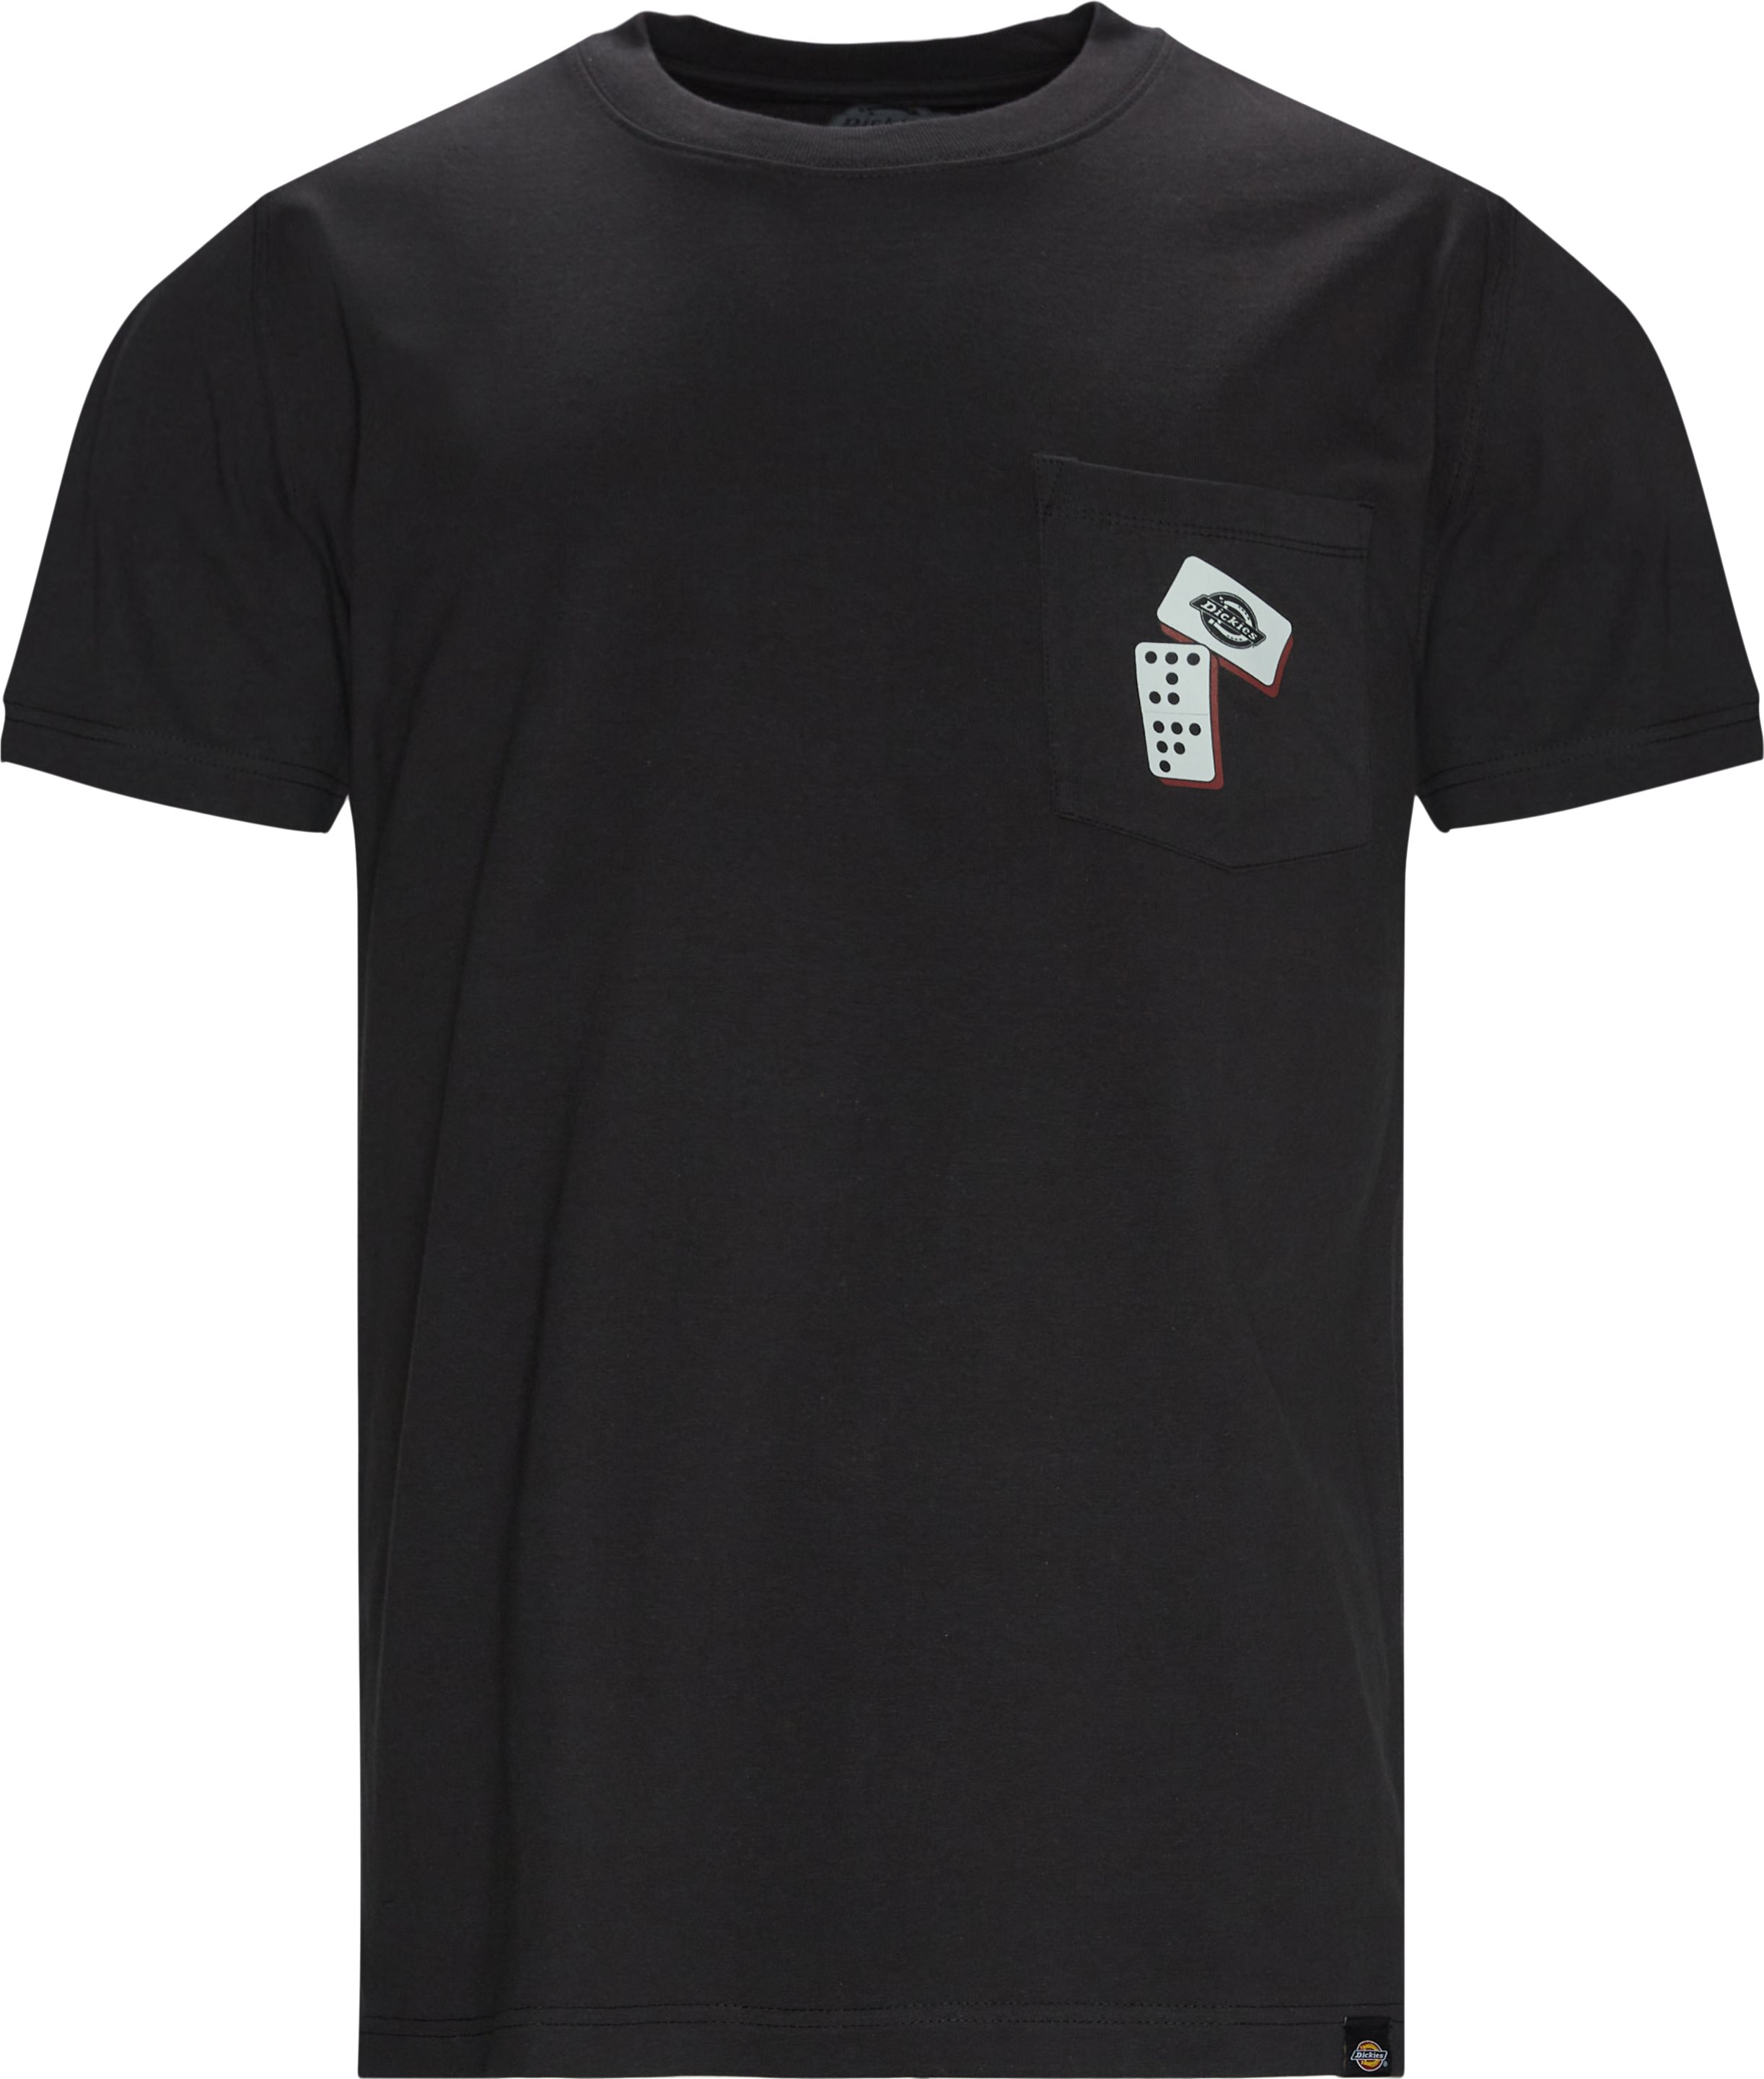 Jf Graphic Tee - T-shirts - Regular fit - Black